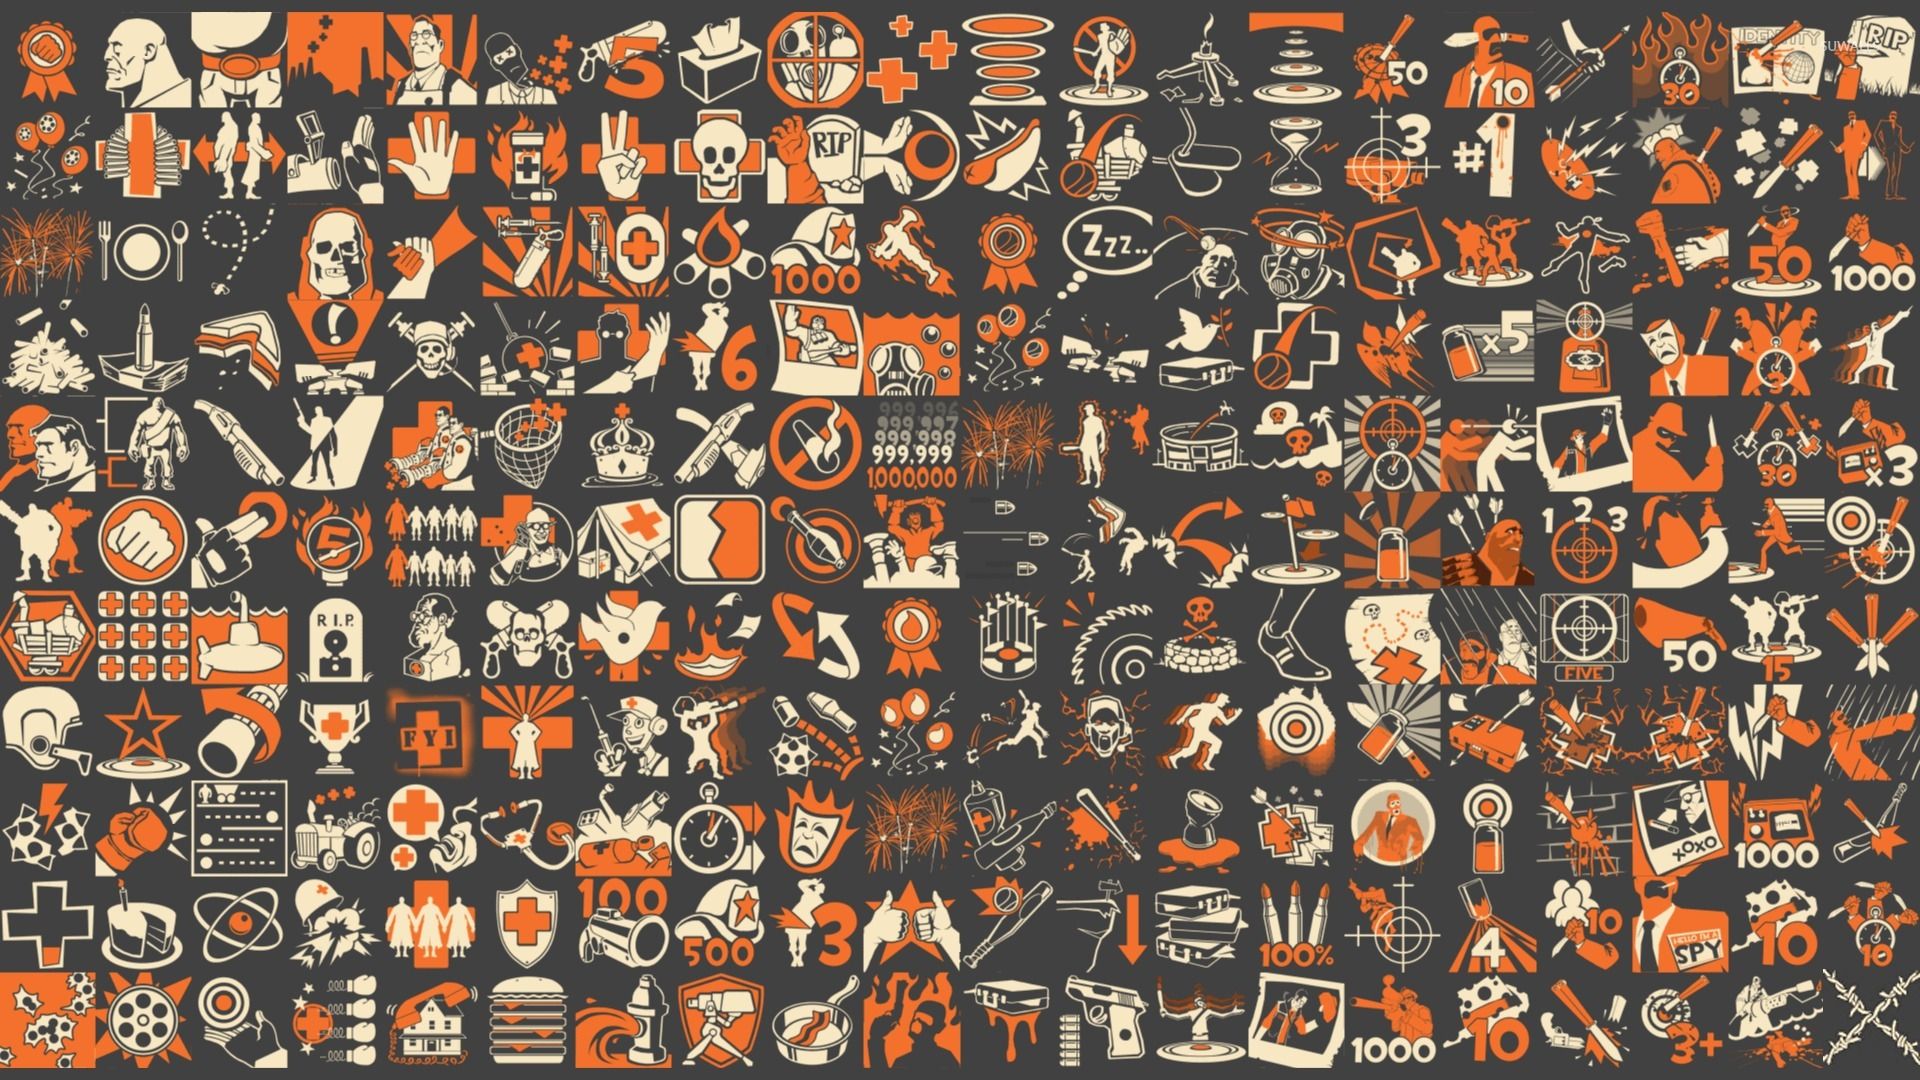 Team Fortress 2 pattern wallpaper wallpaper